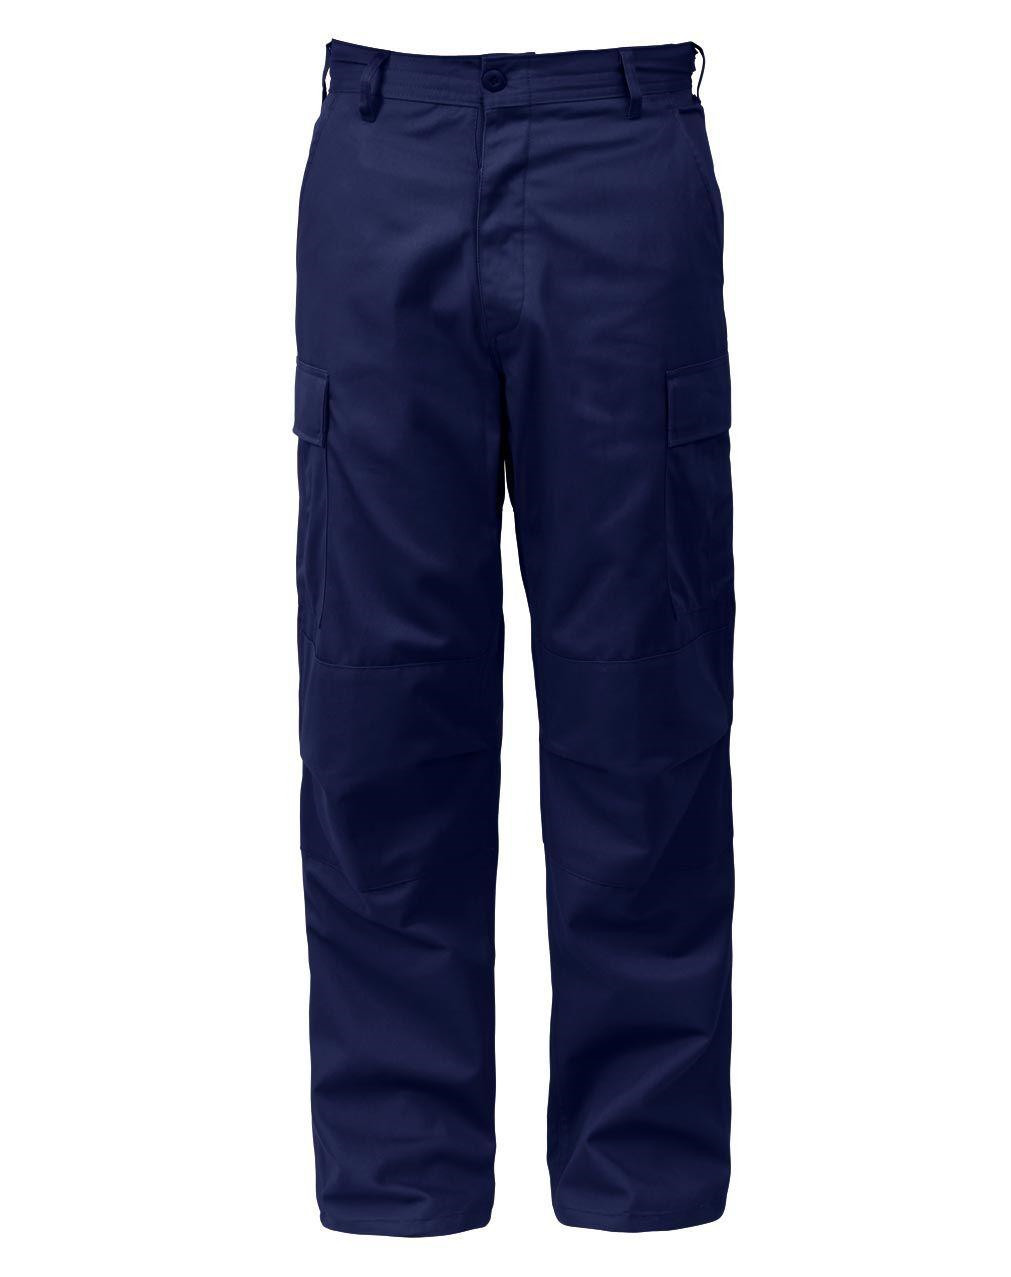 Rothco Uniform Bukser (Navy, L)